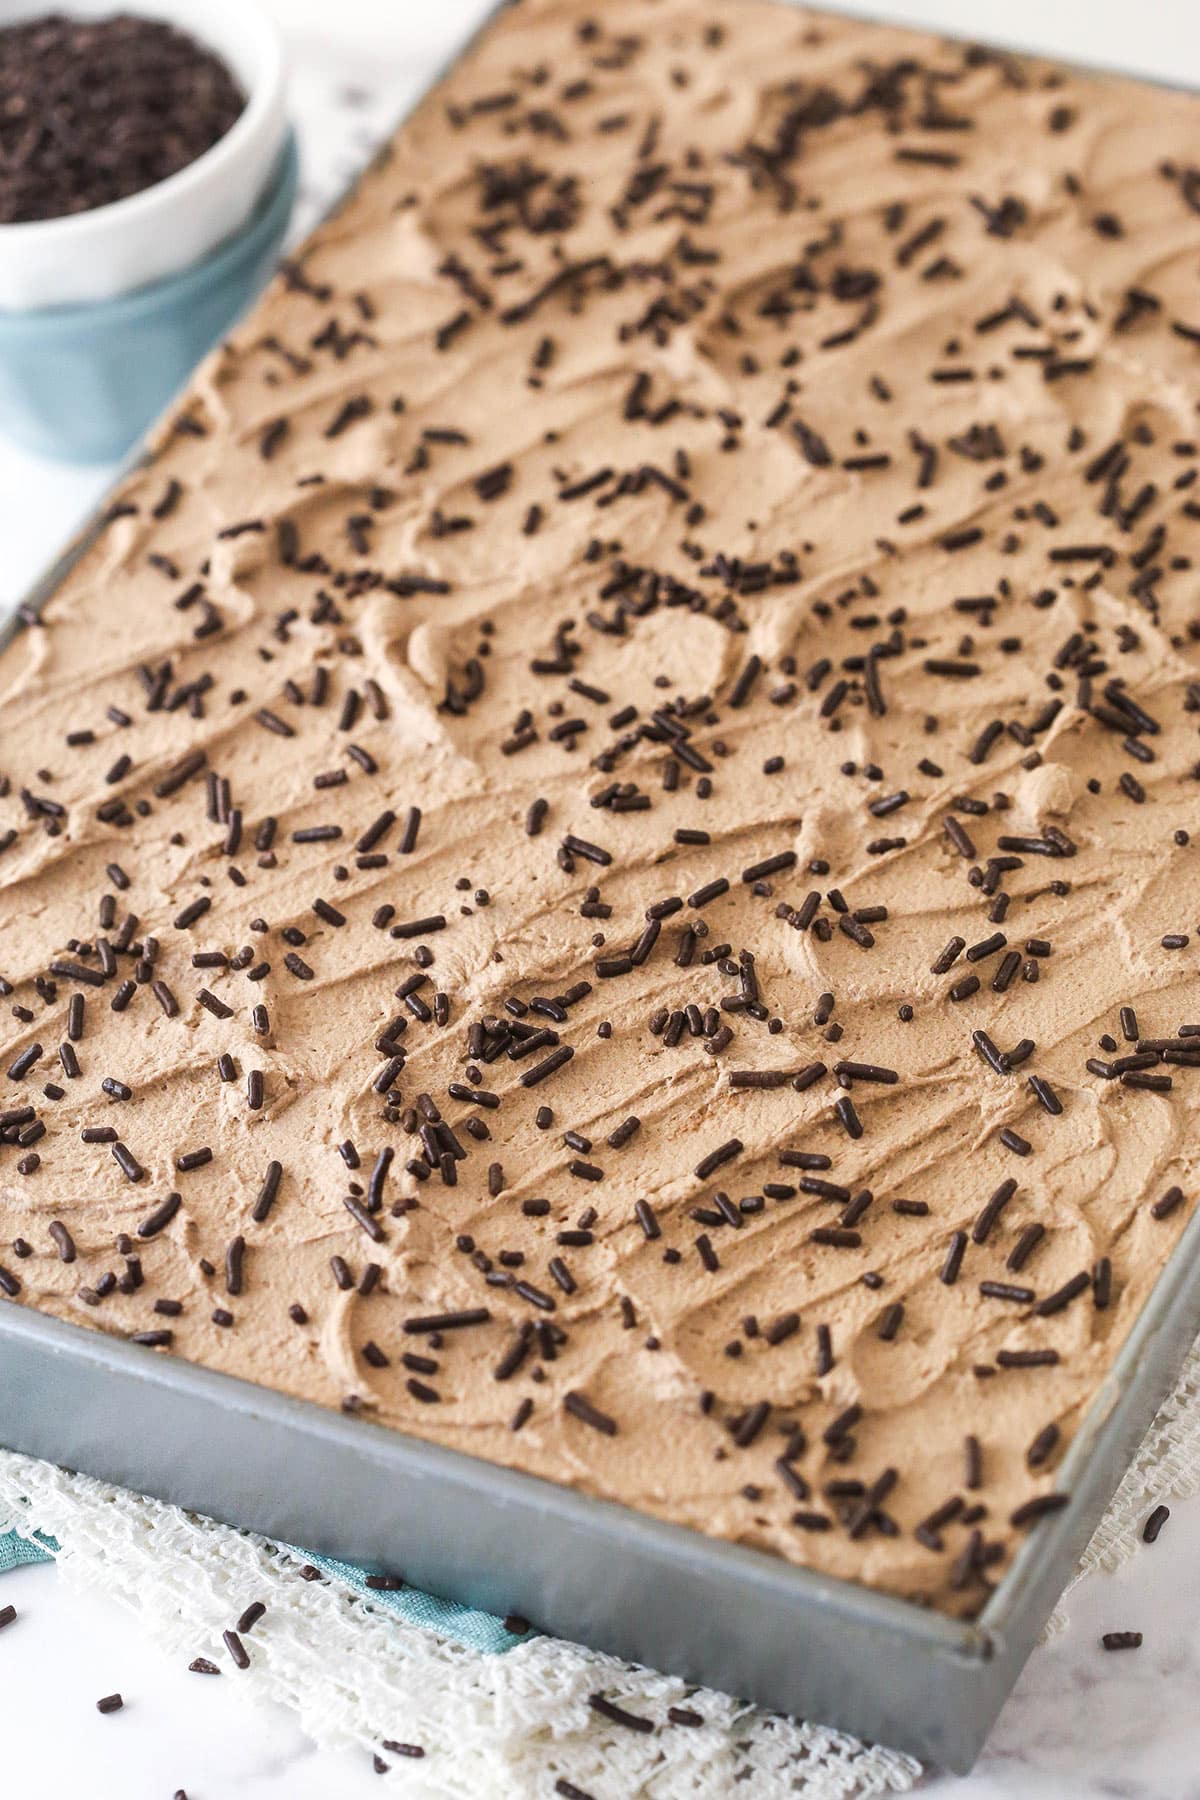 Overhead image of chocolate poke cake in a baking pan.